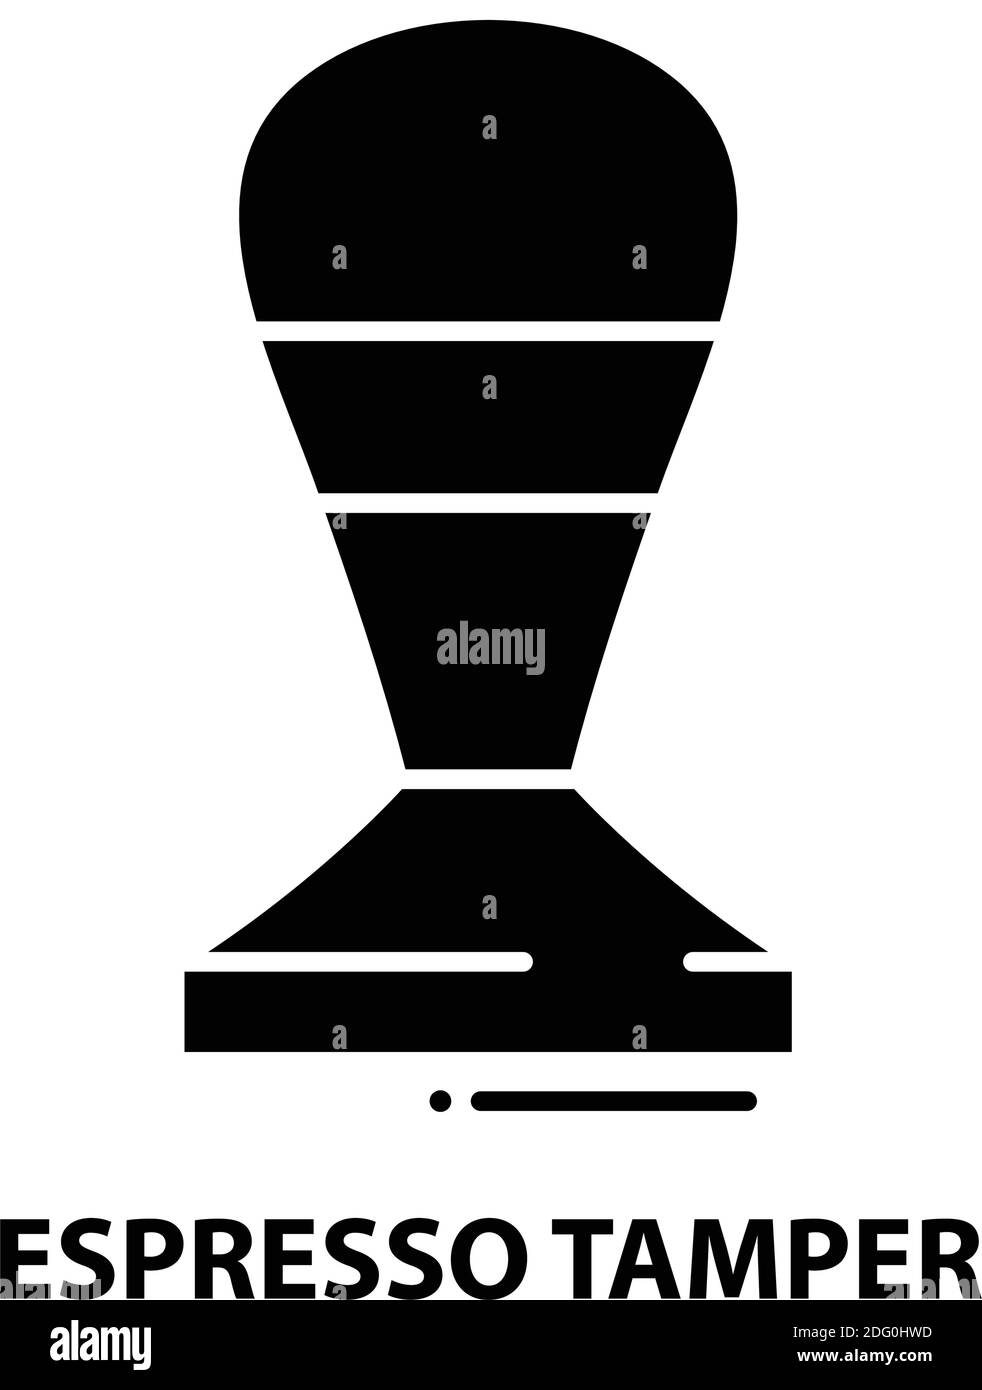 espresso tamper icon, black vector sign with editable strokes, concept illustration Stock Vector